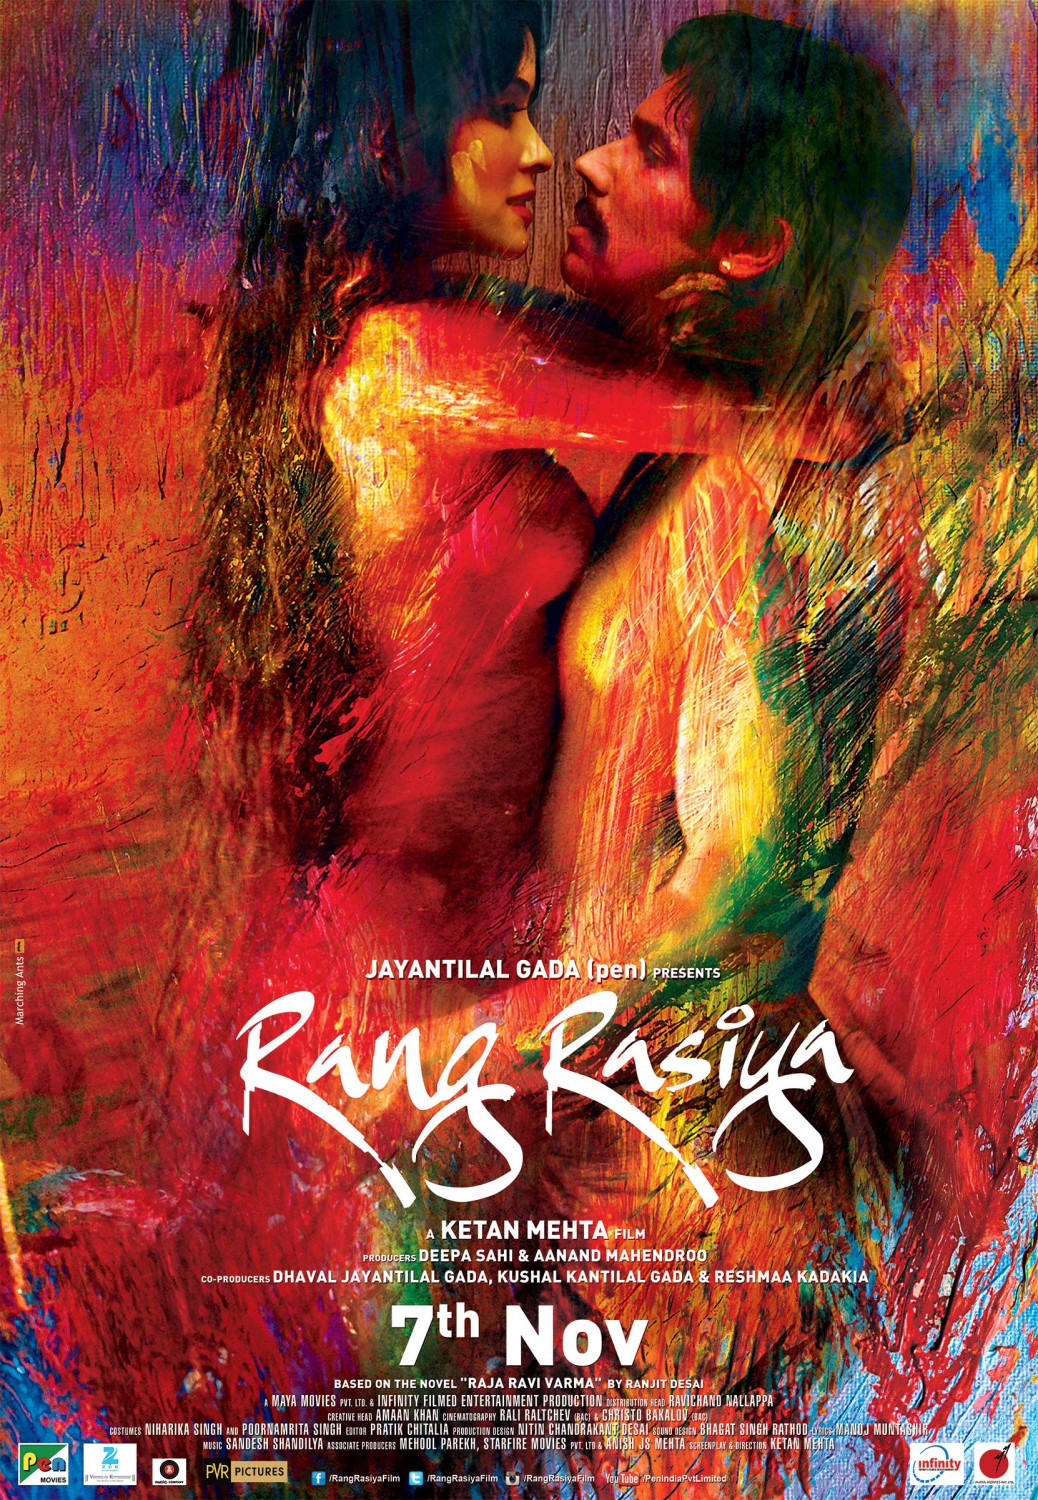 Extra Large Movie Poster Image for Rang rasiya (#7 of 9)